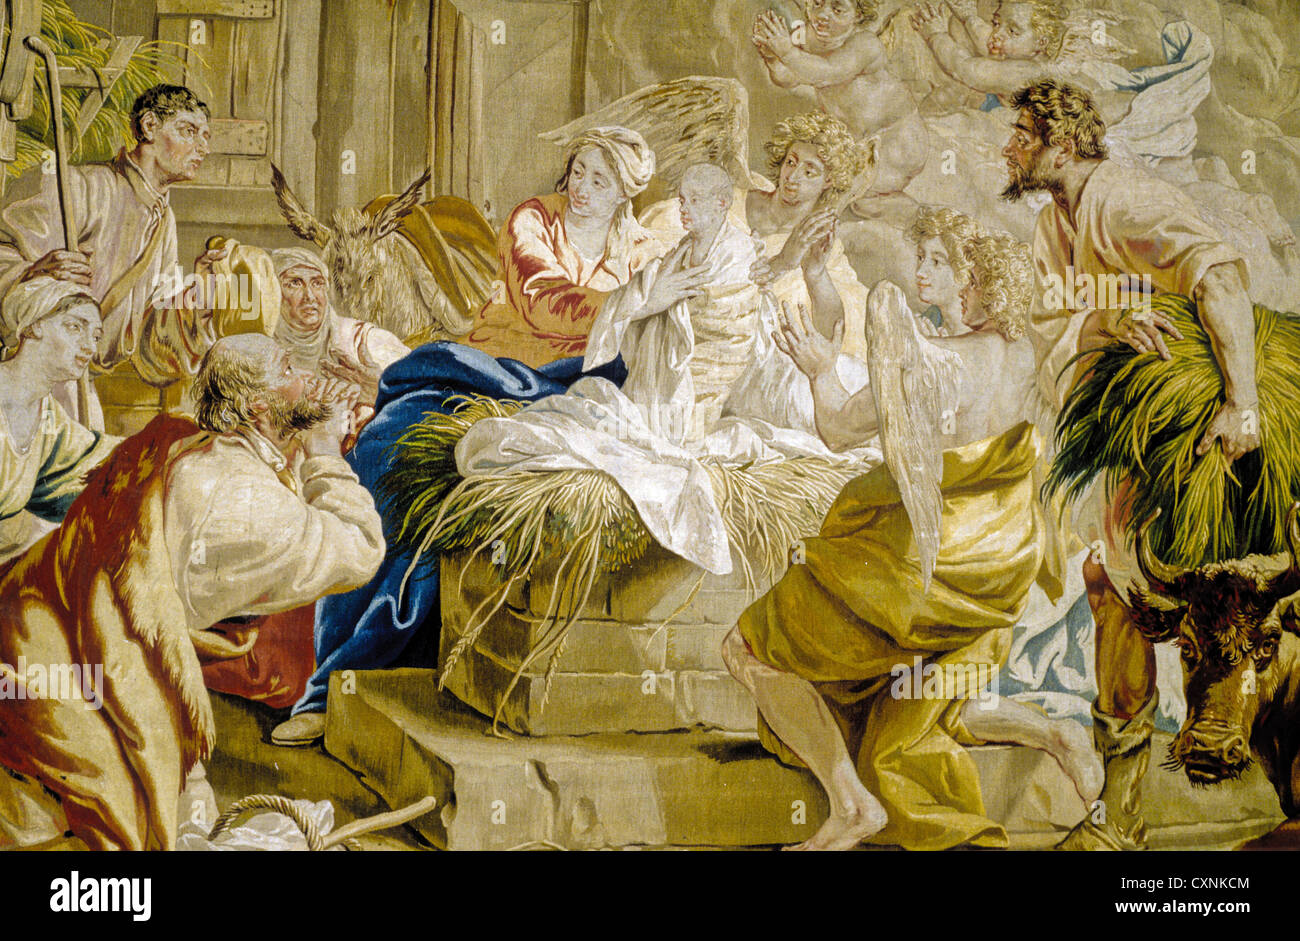 Tapestry depicting the Nativity scene in Bruges, Belgium Stock Photo